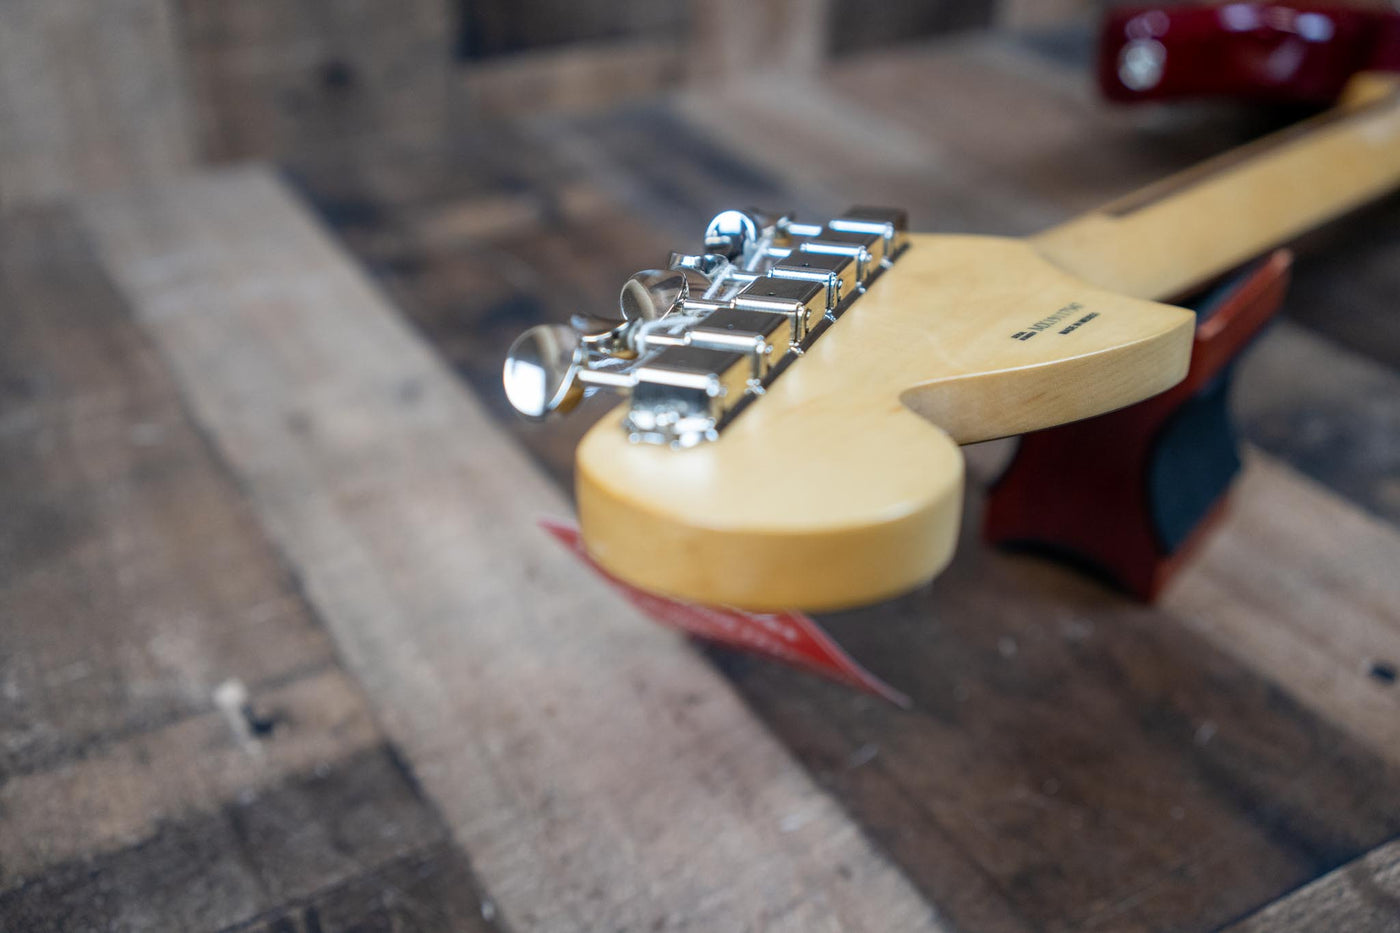 Fender FSR Mahogany Blacktop Stratocaster HH Crimson Red Transparent 2019 w/ Case Candy, Bag